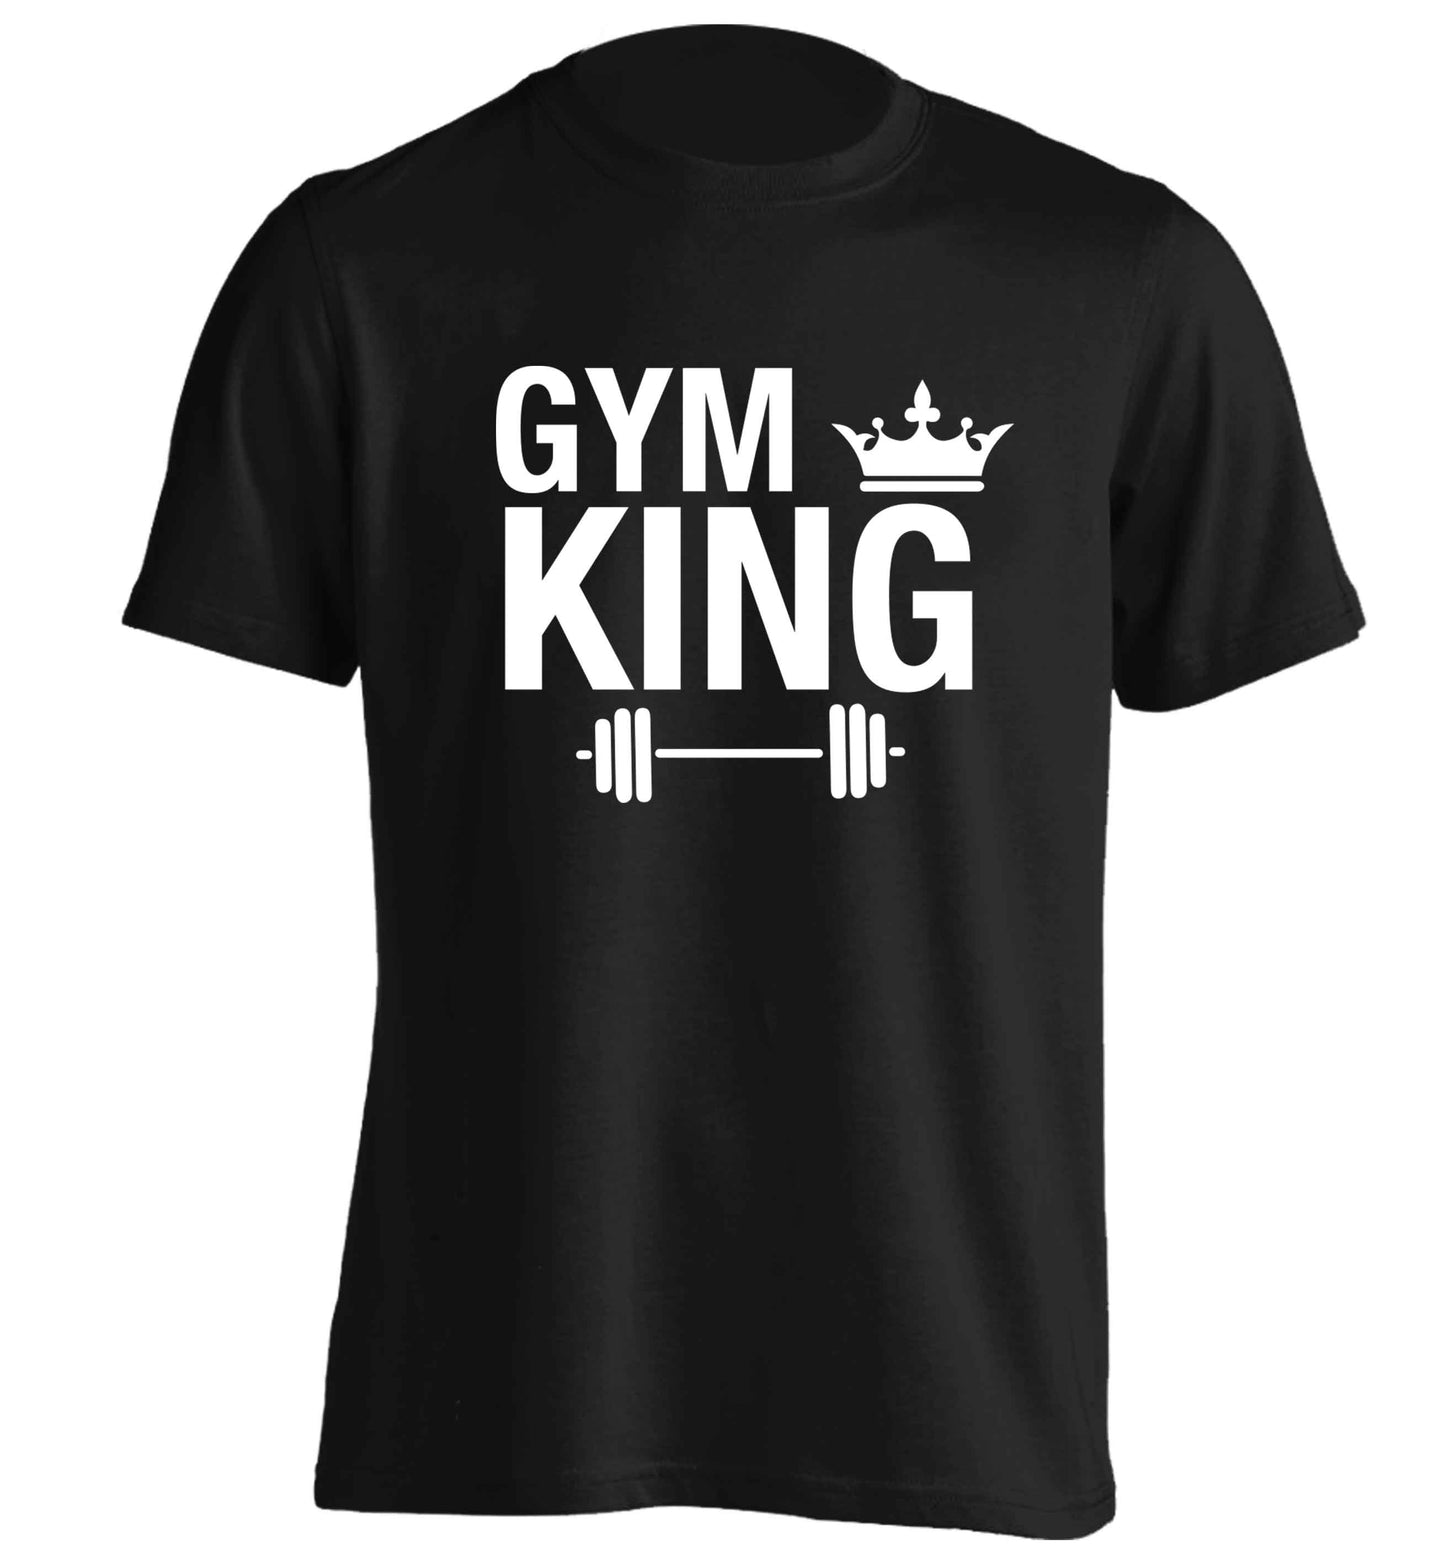 Gym king adults unisex black Tshirt 2XL